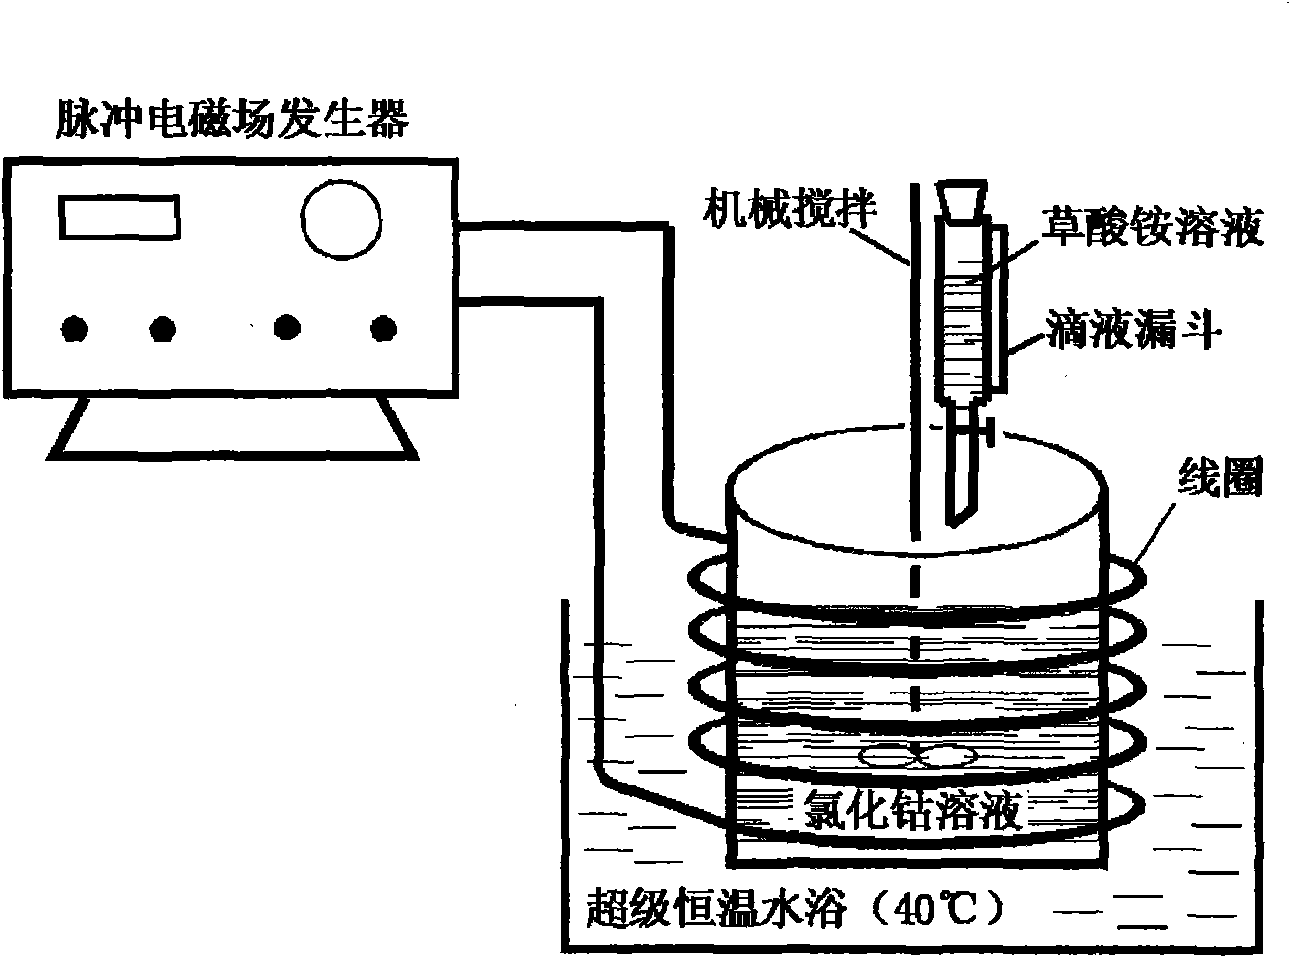 Method for preparing cobalt oxalate by pulse electromagnetic field